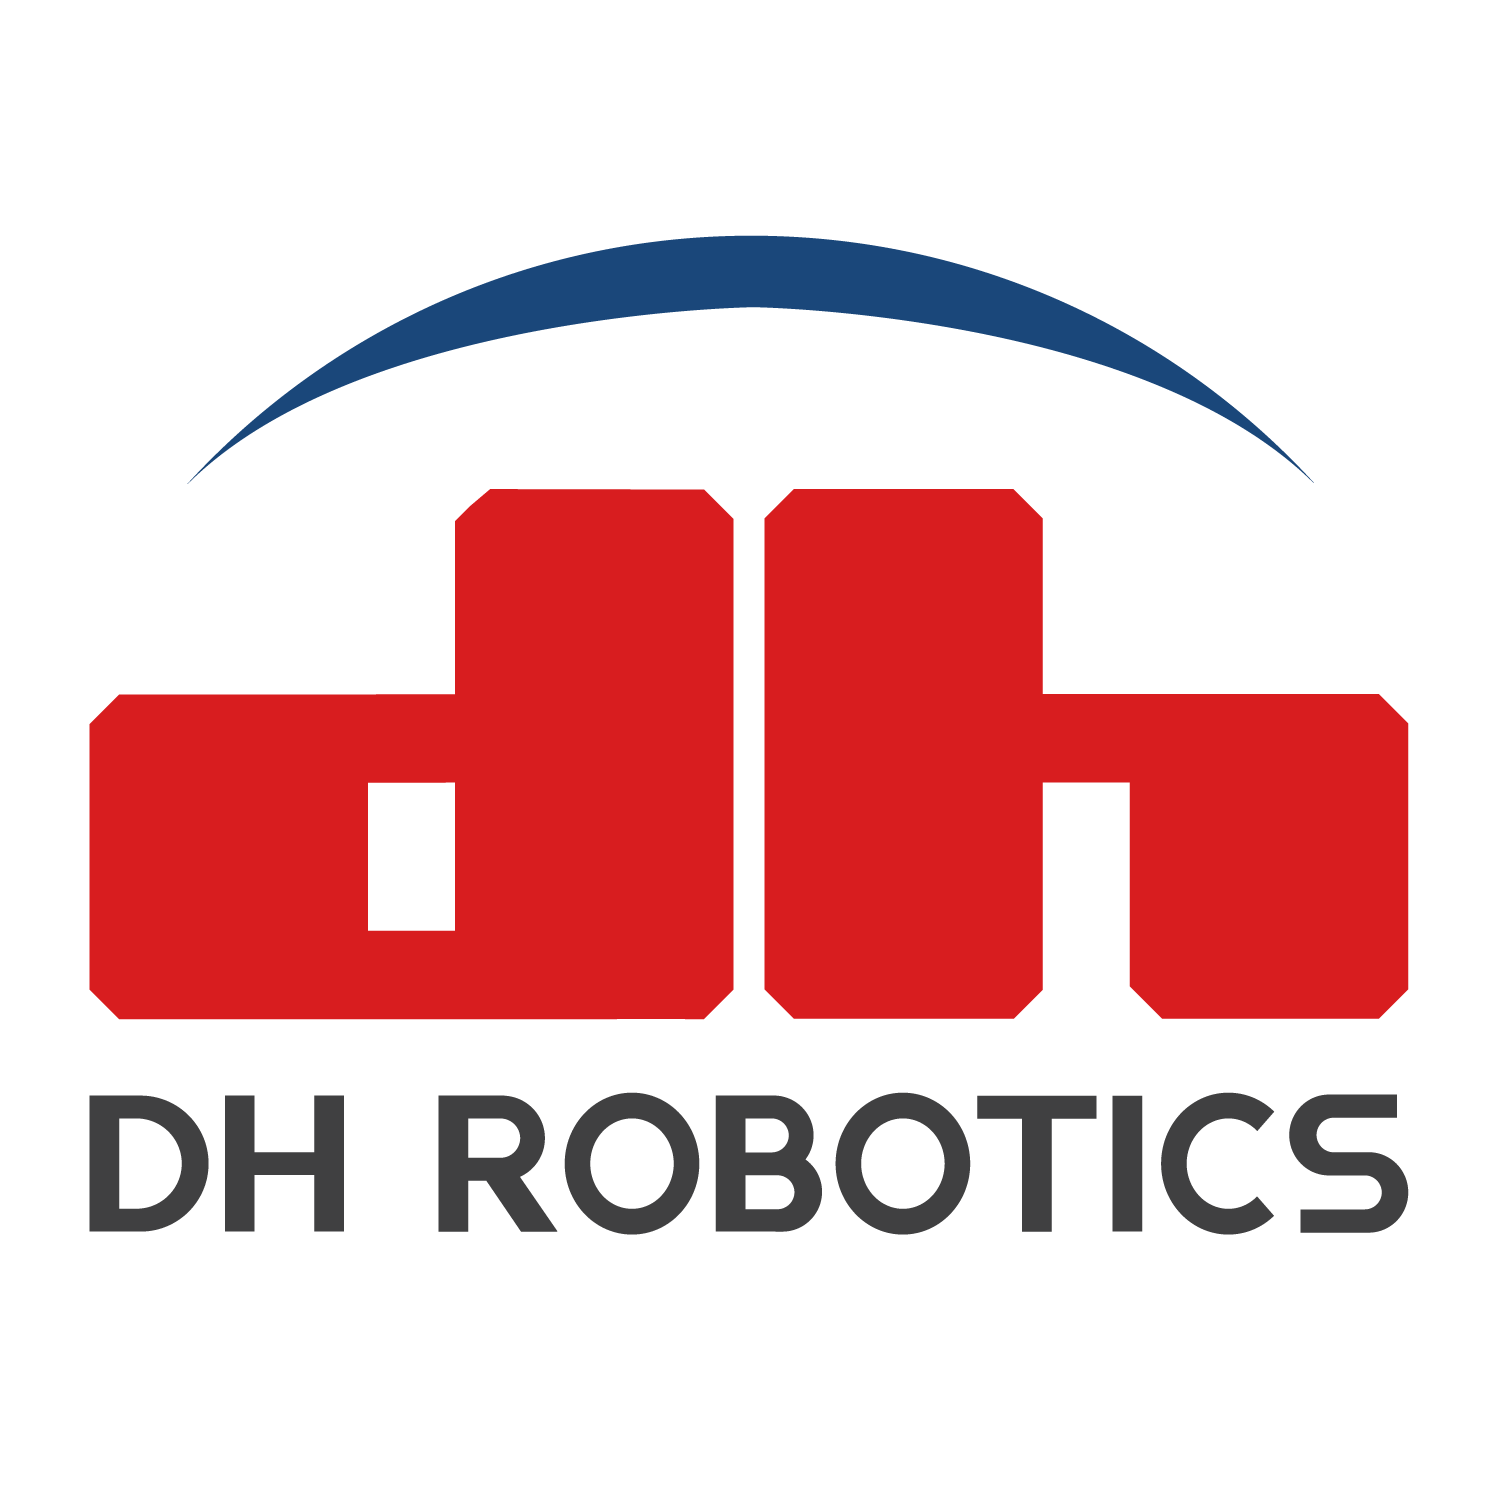 Dh robotics logo